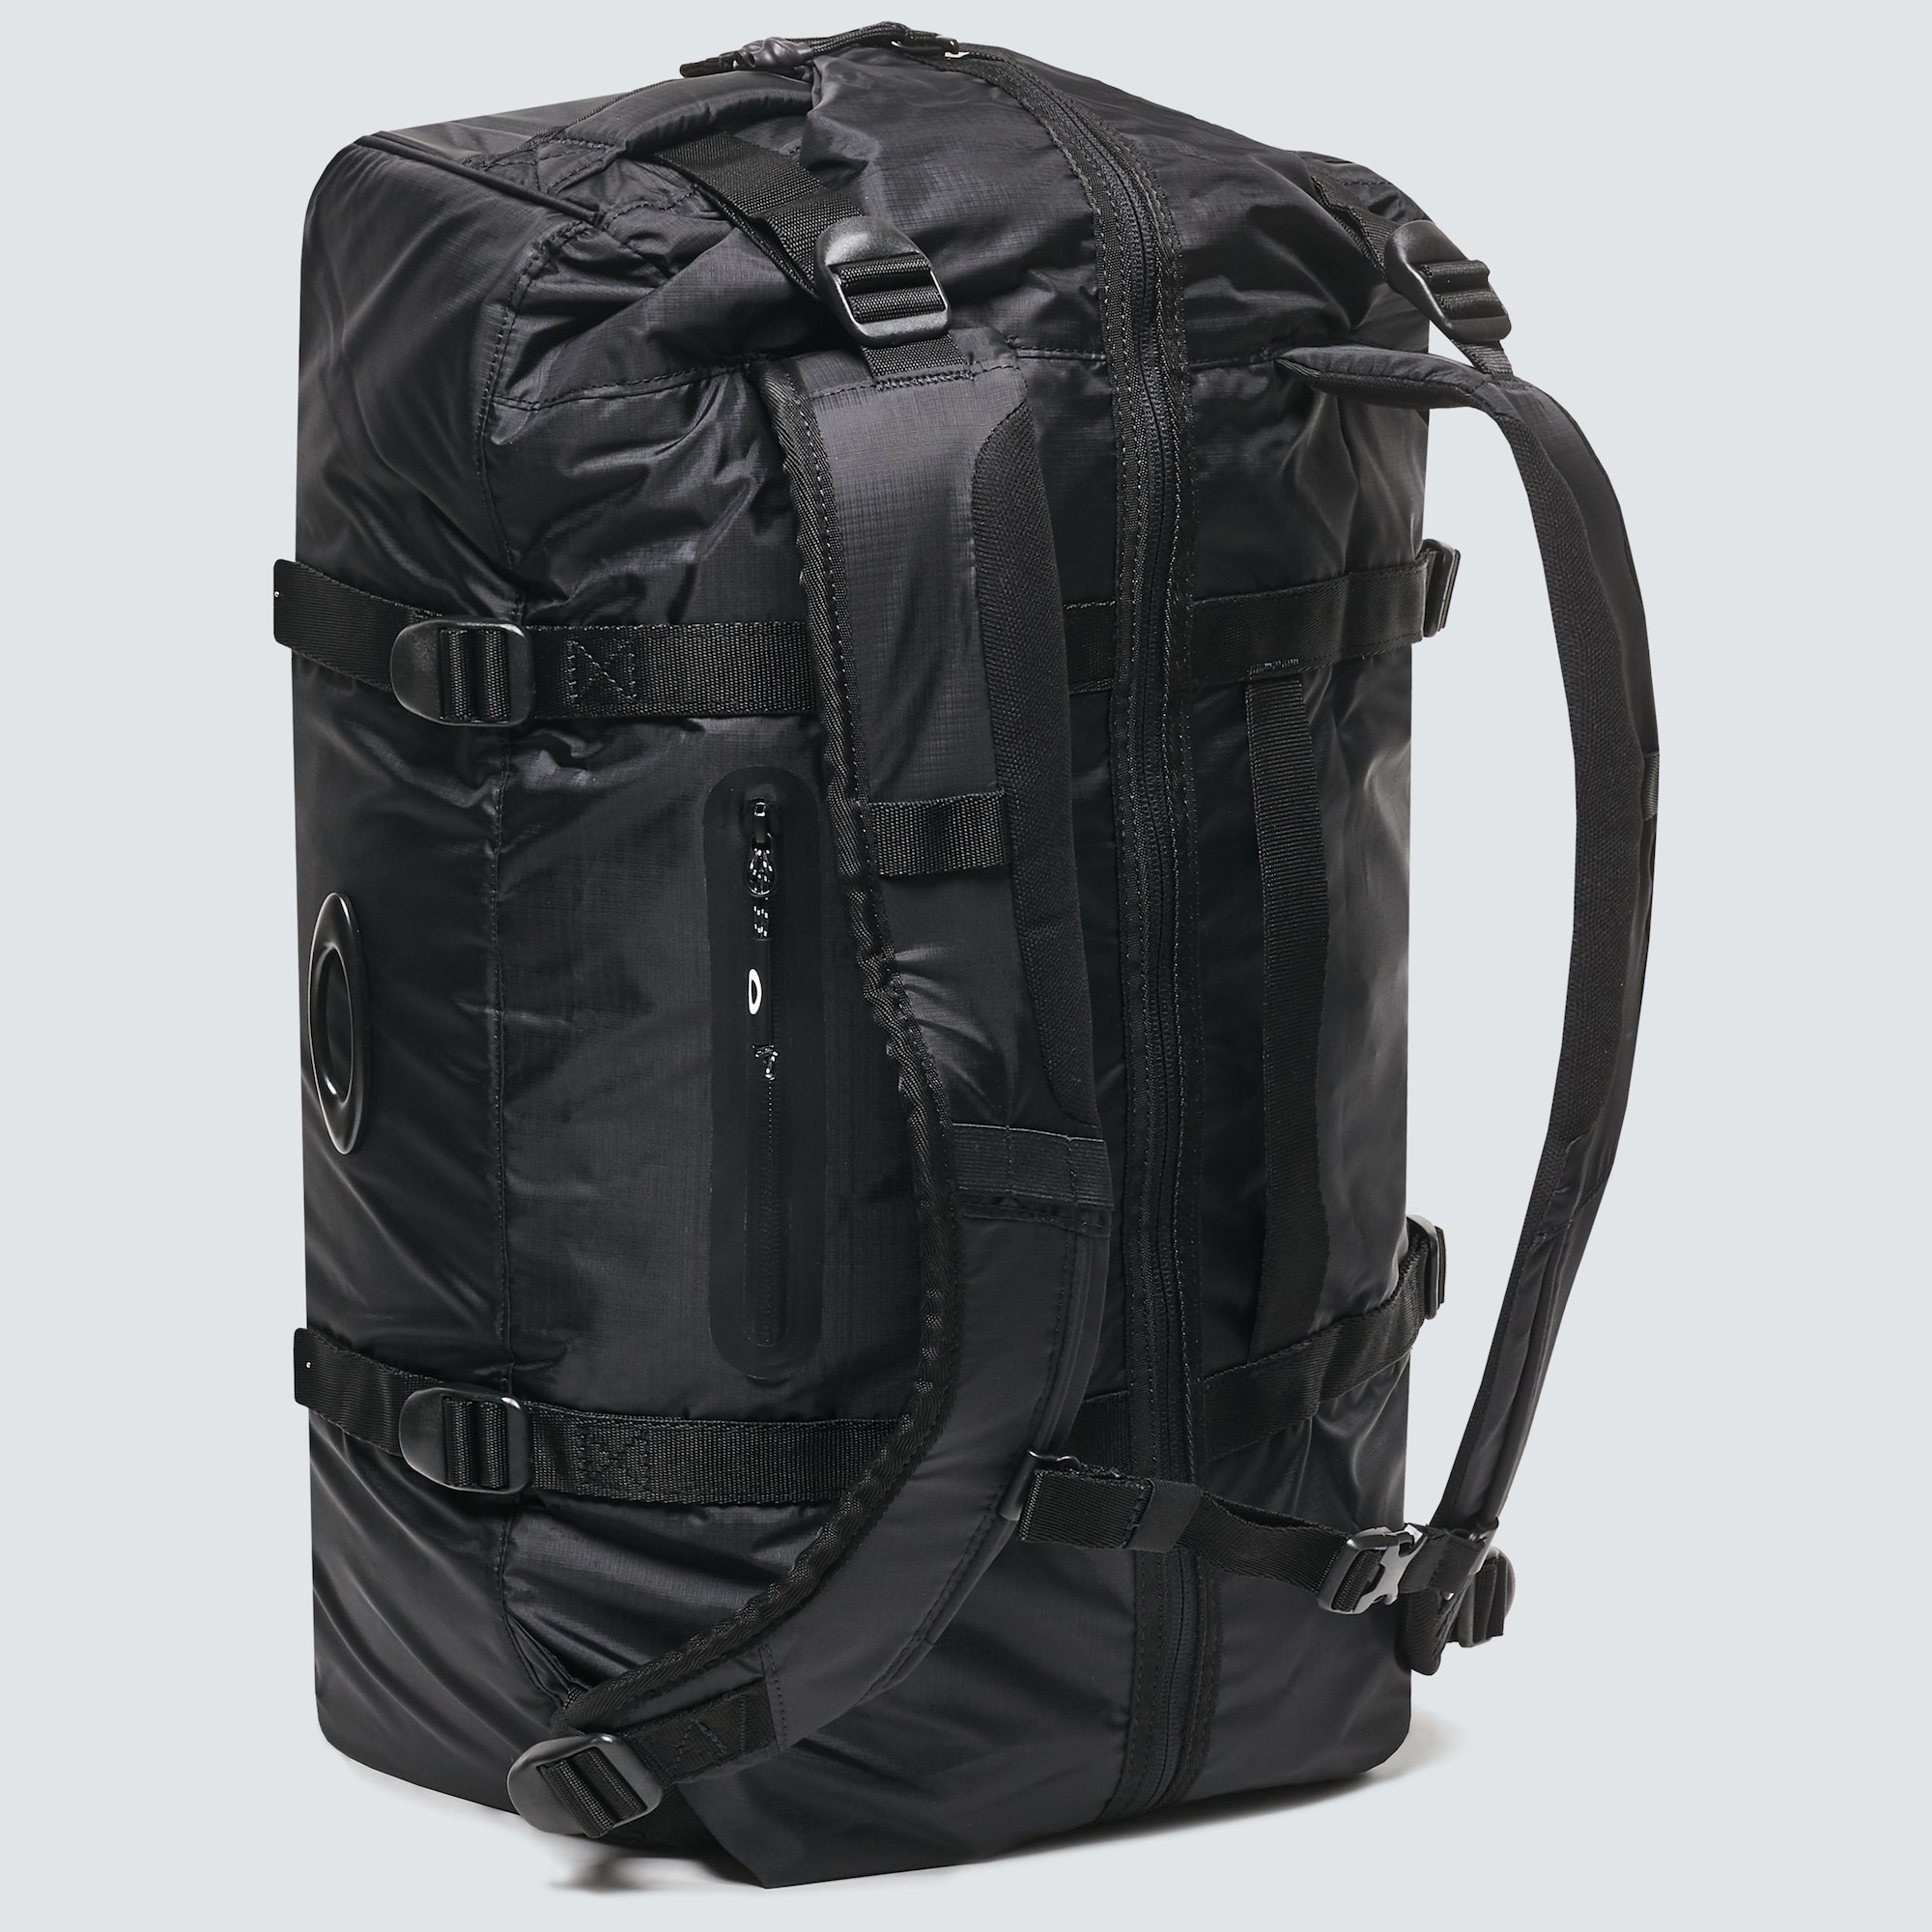 Oakley Outdoor Duffle Bag - Blackout - FOS900028-02E | Oakley US Store ...